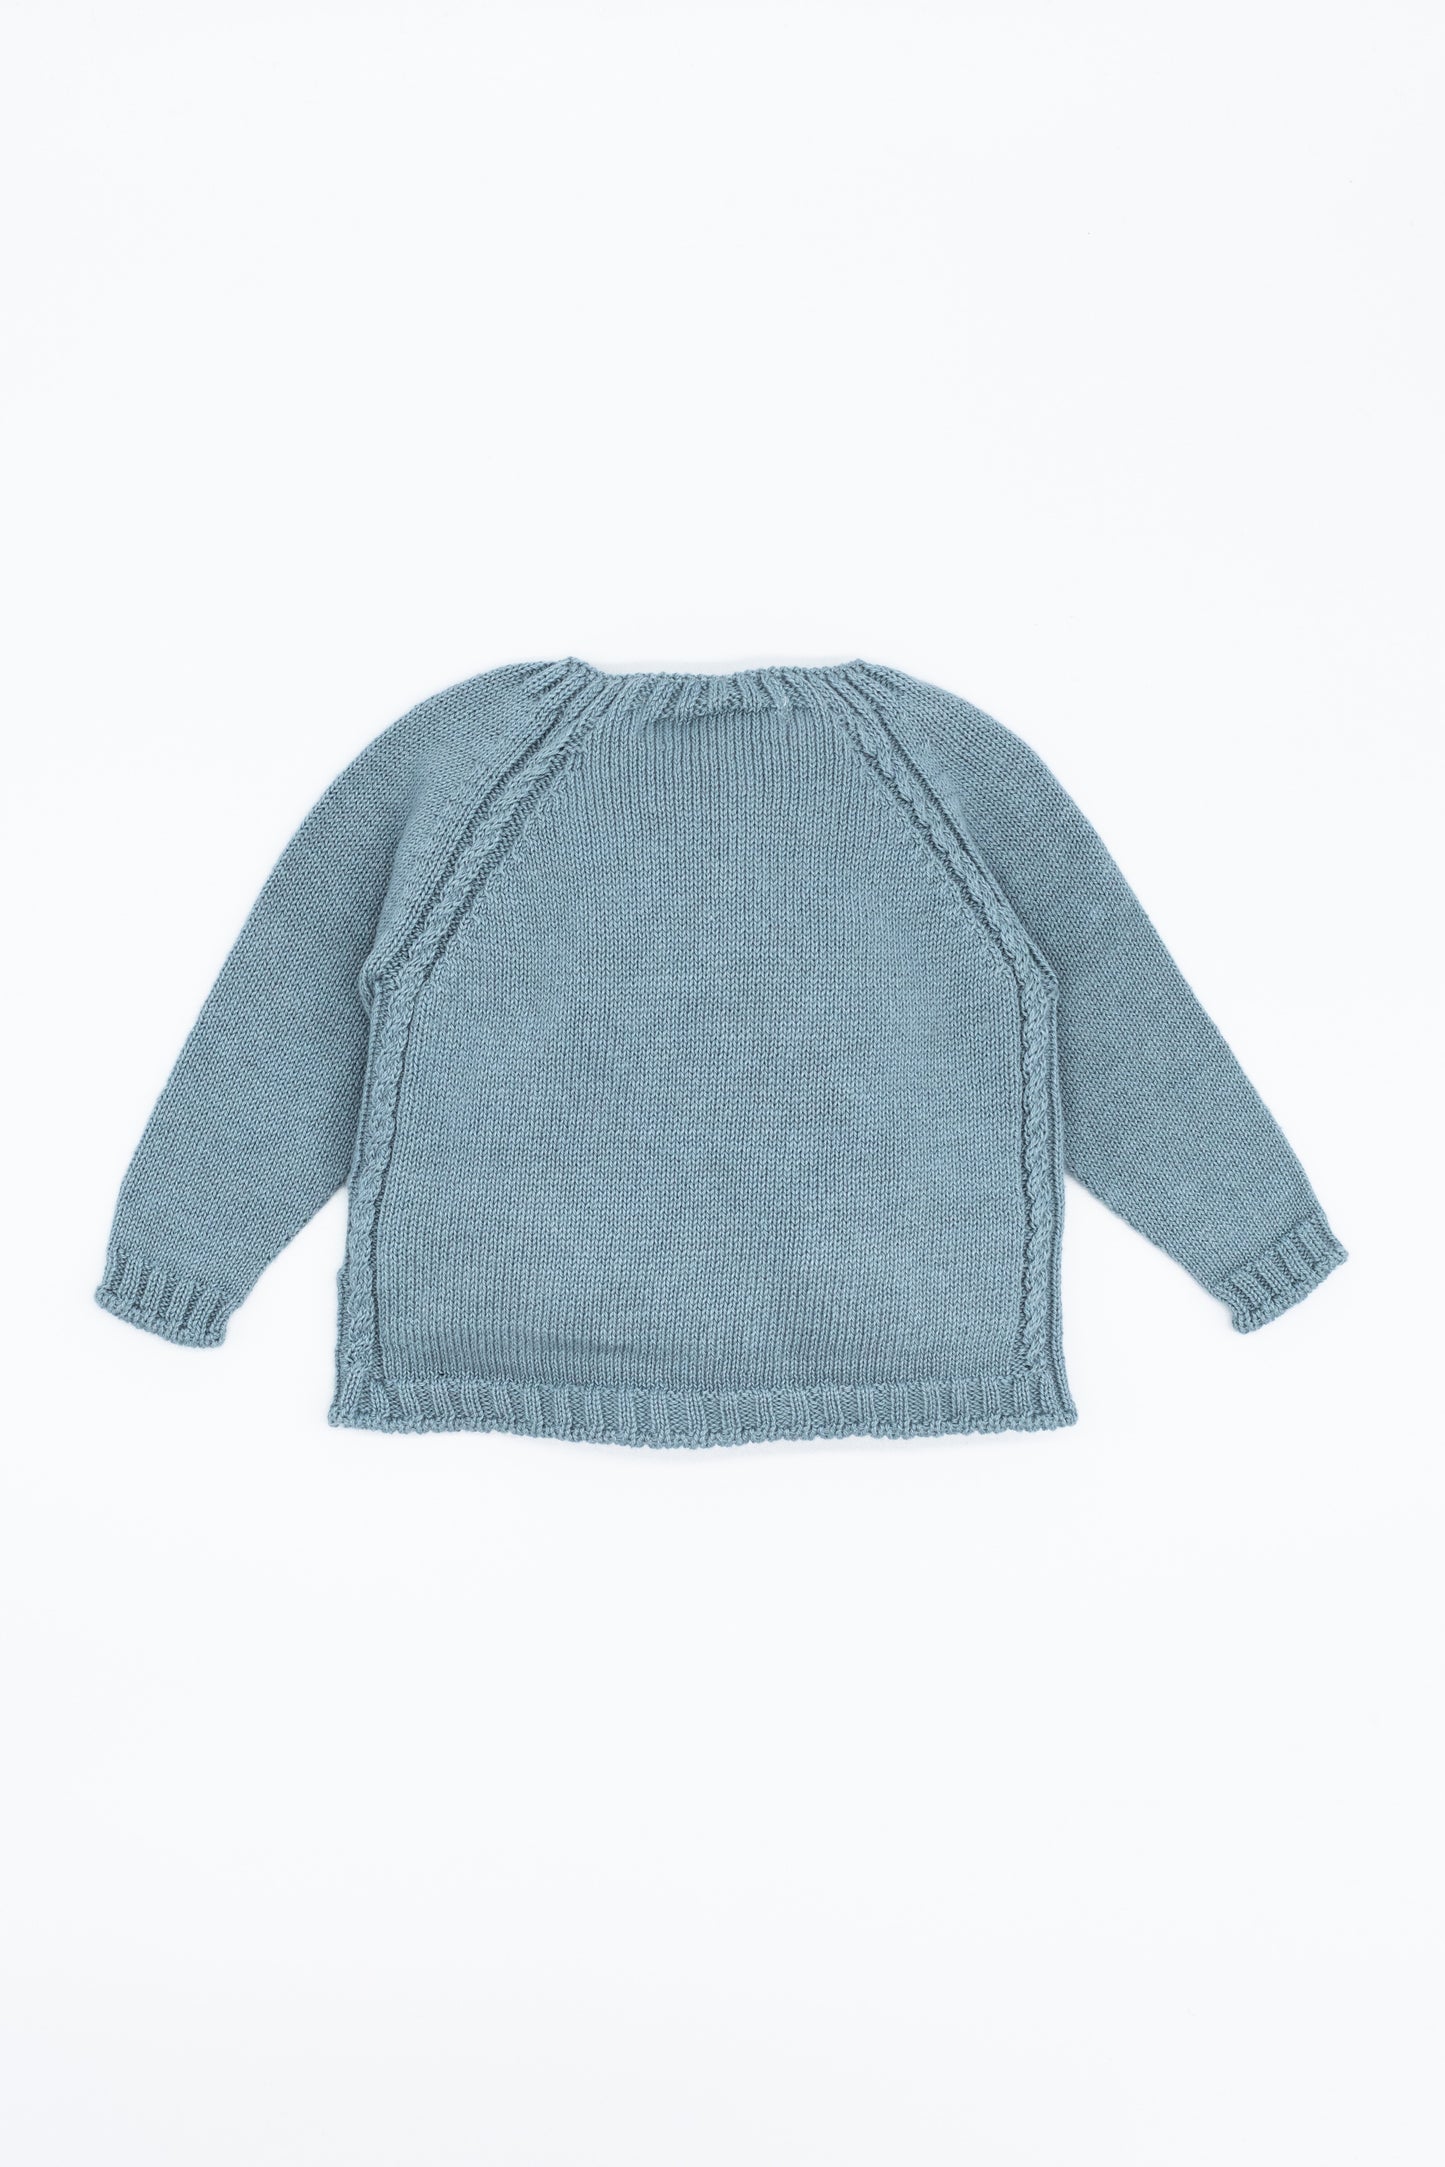 Knitted sweater made of merino wool